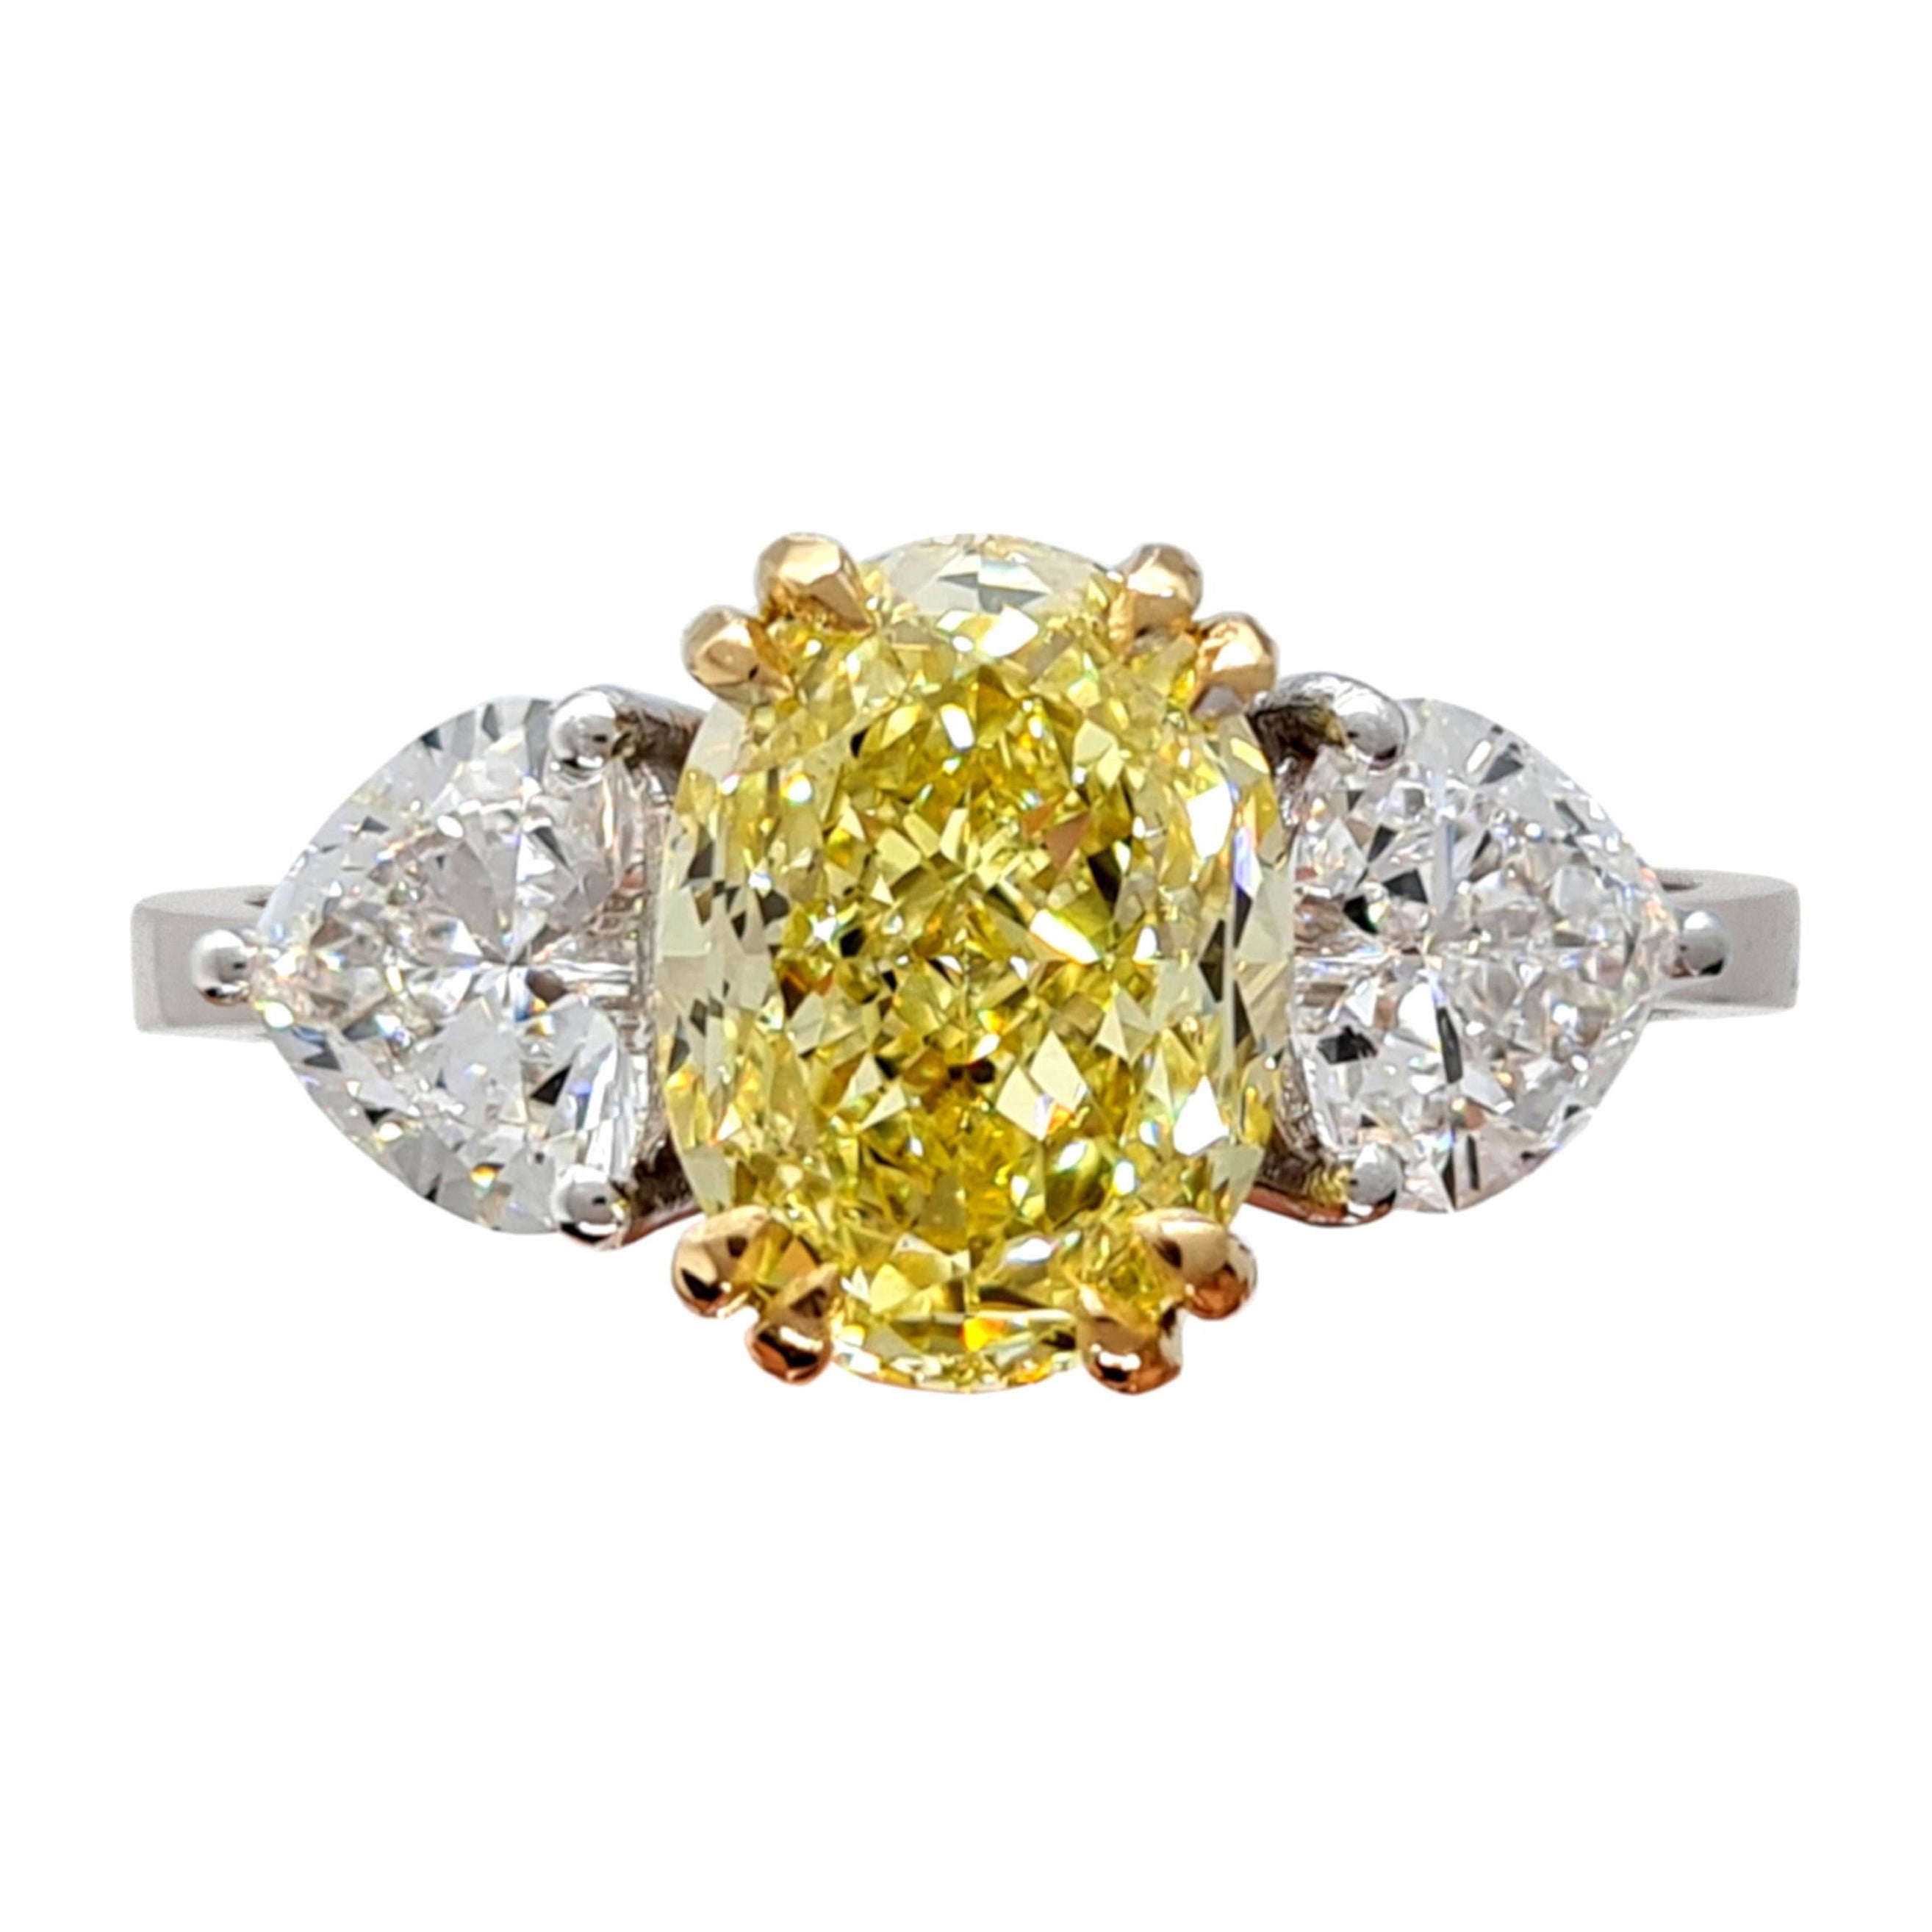 Anillo de oro de 18 quilates con diamante ovalado amarillo fantasía de 2,5 quilates certificado por GIA